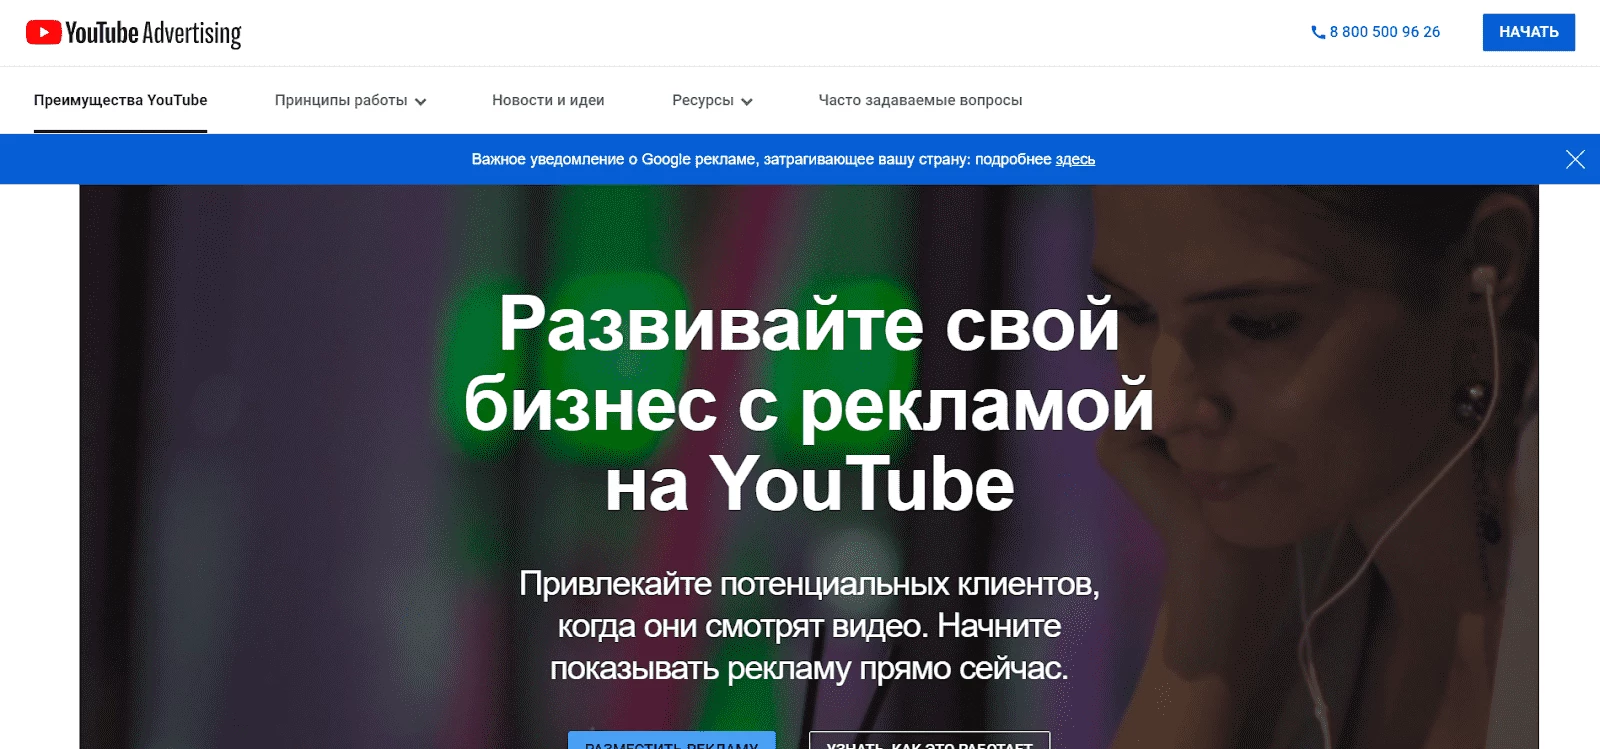 YouTube Advertising - сервис для настройки рекламы на хостинге